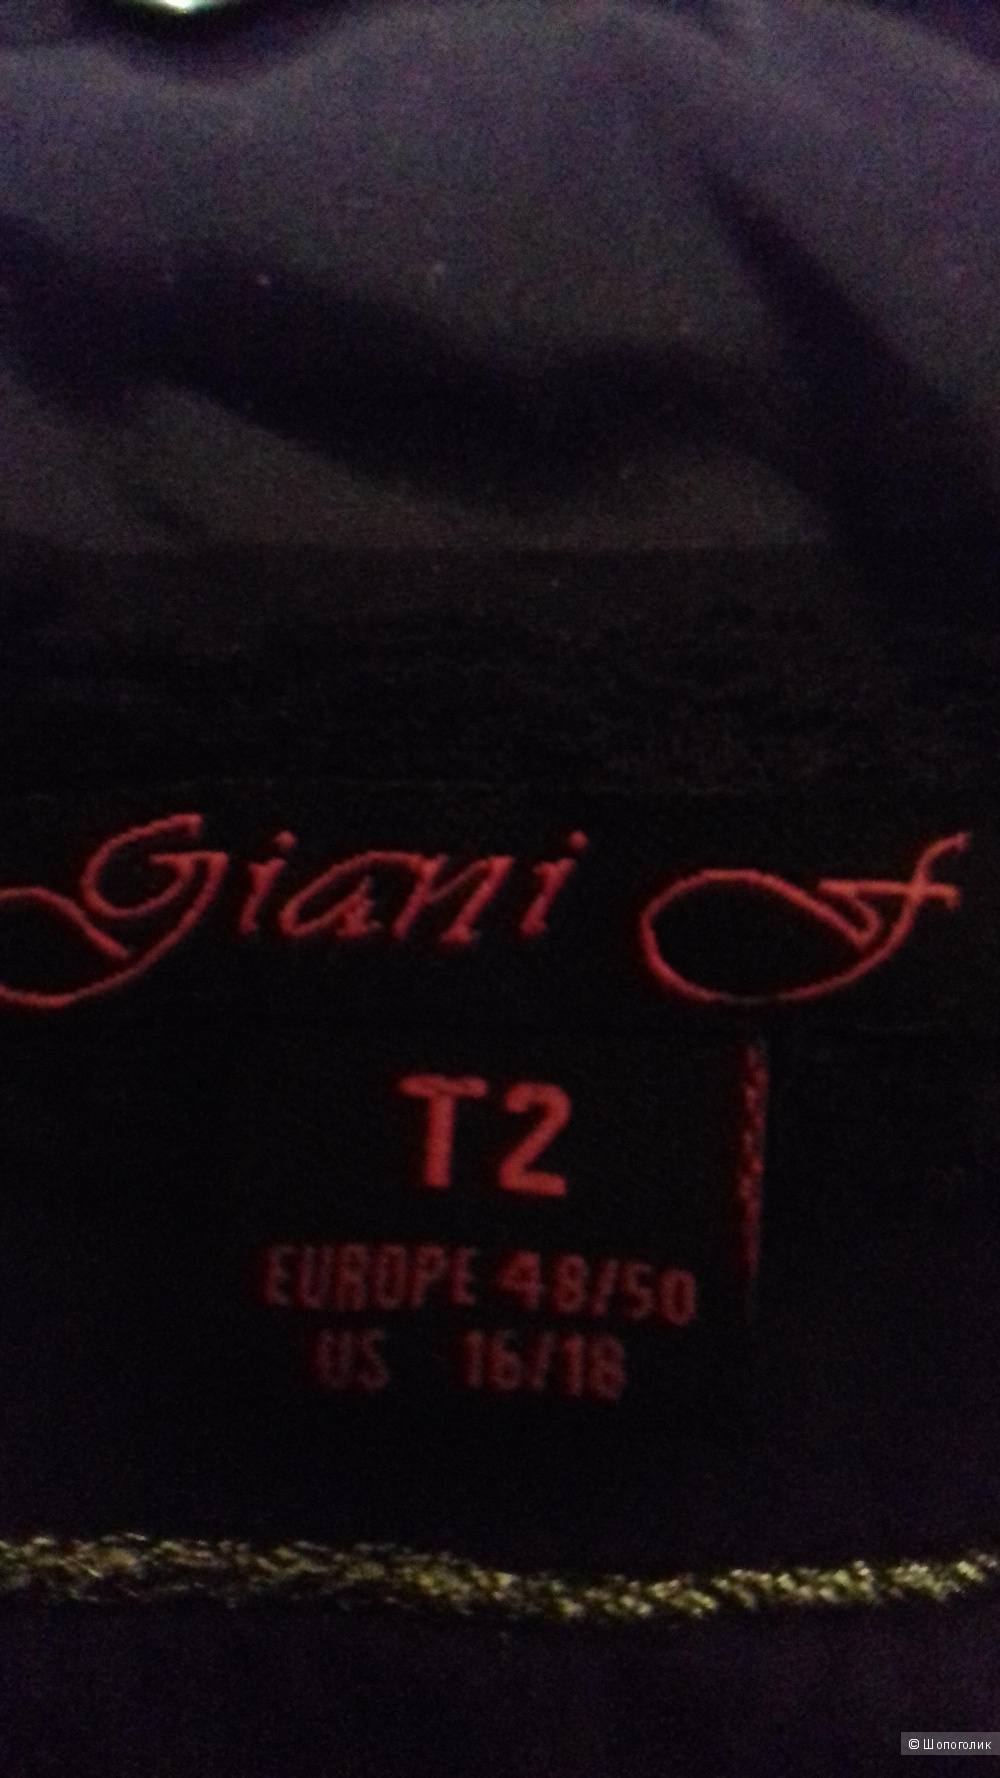 Стеганное пальто- пуховик Giani Forte.  Франция.  р. T2  ( русскиий р. 52 )